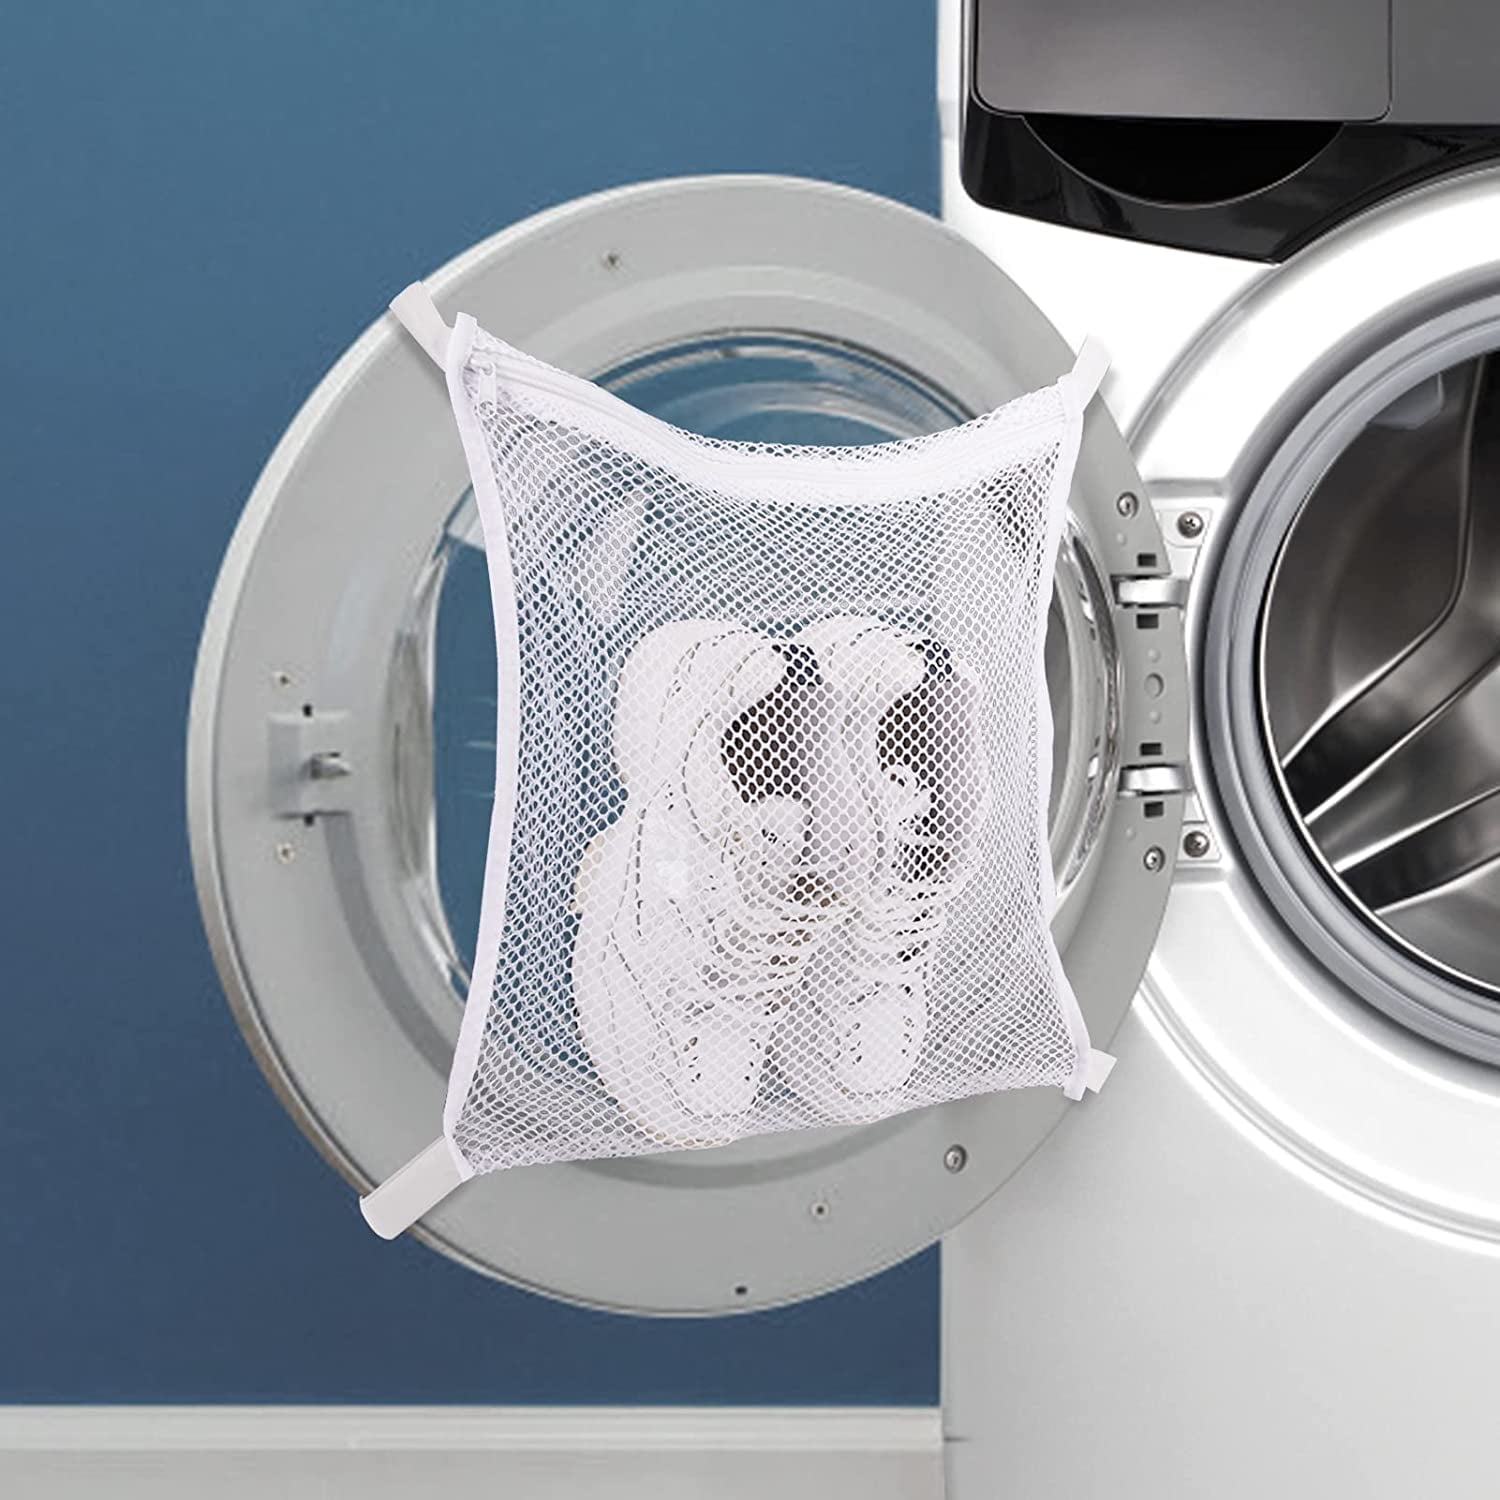 Bra Laundry Net Laundry Bag Bra Washing Kit Bra Protector Washing Bag for  Washing Machines and Dryers Bra Protector for bras and bikinis,,F117715 